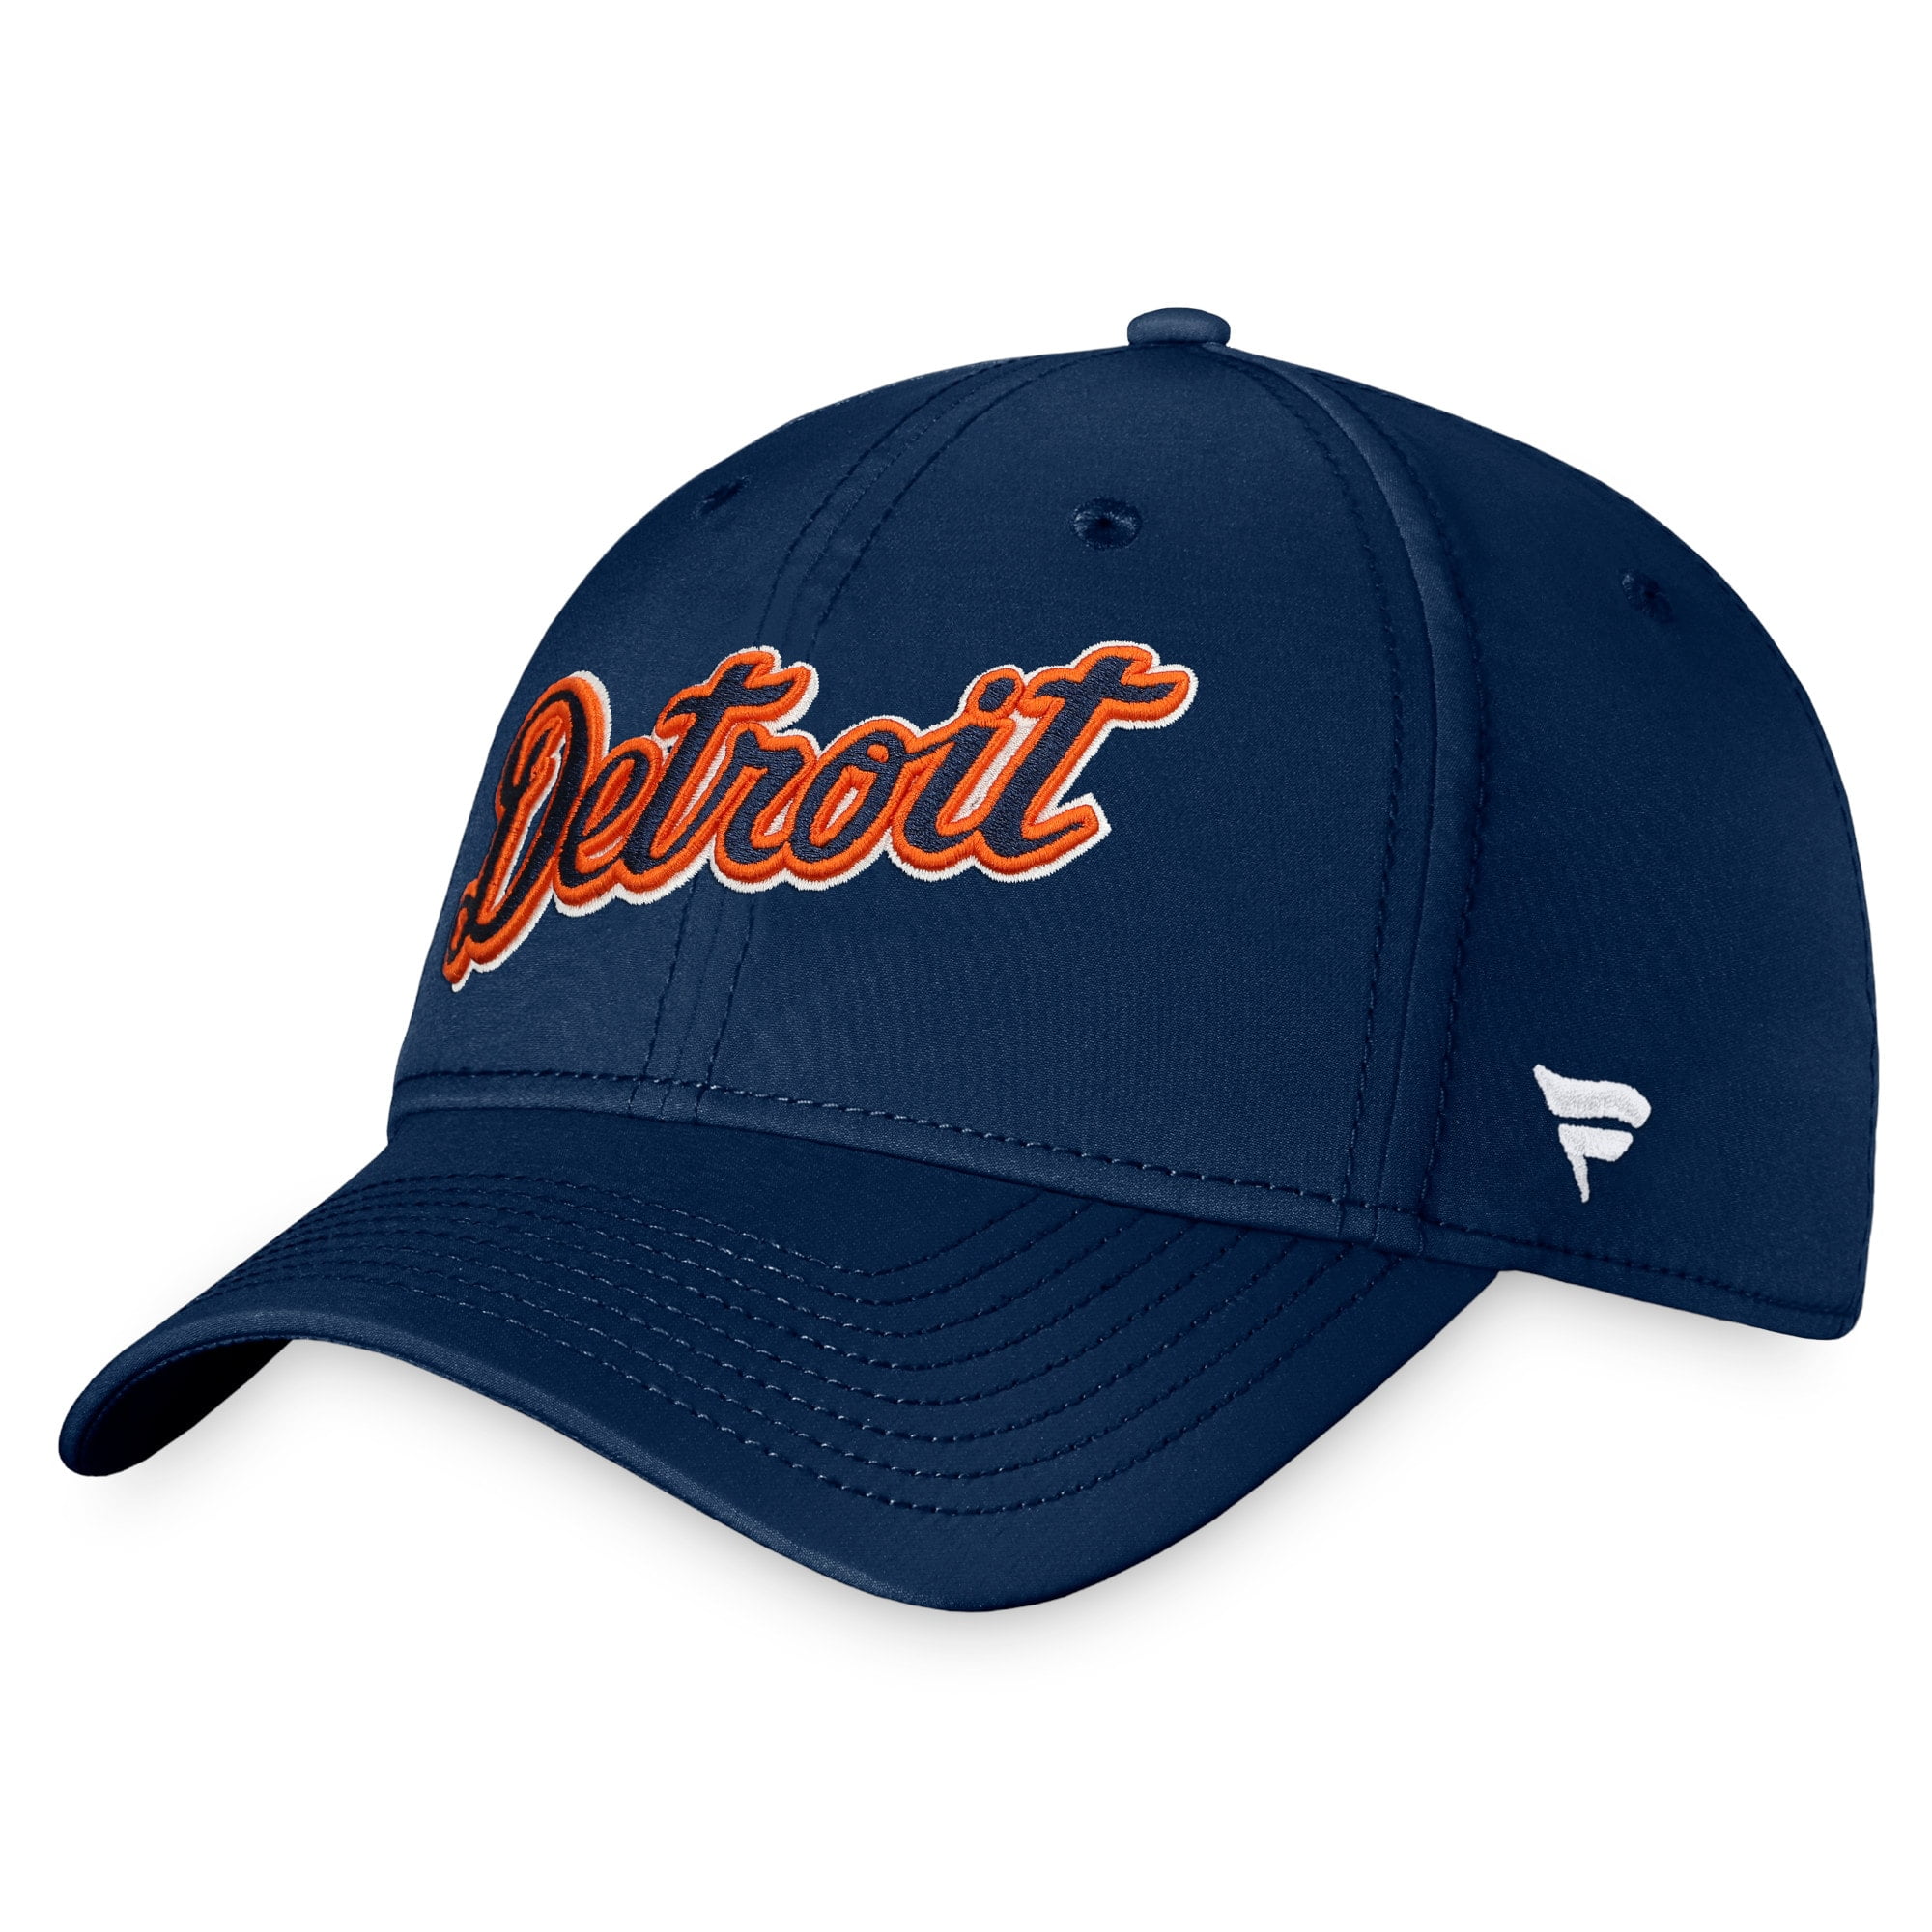 Men's Fanatics Branded Navy Detroit Tigers Core Flex Hat 